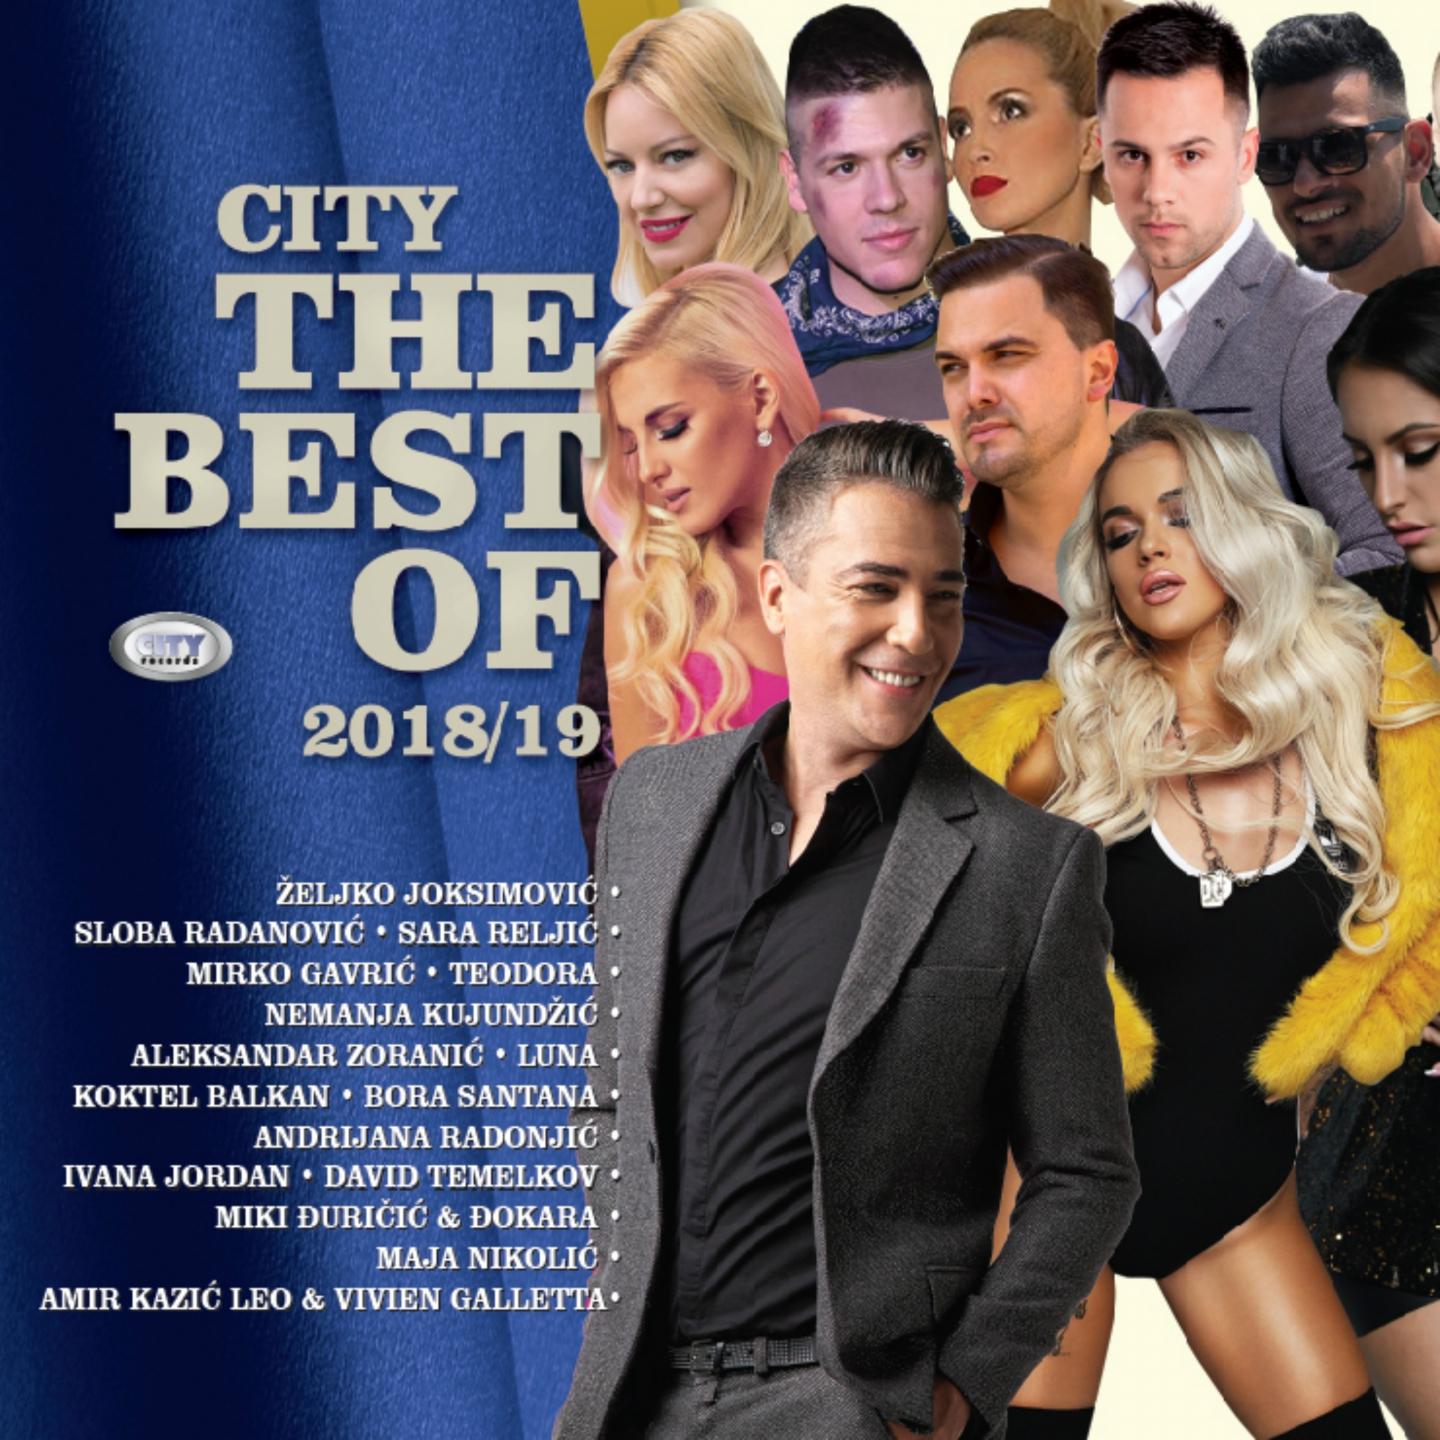 City best of 2018/19